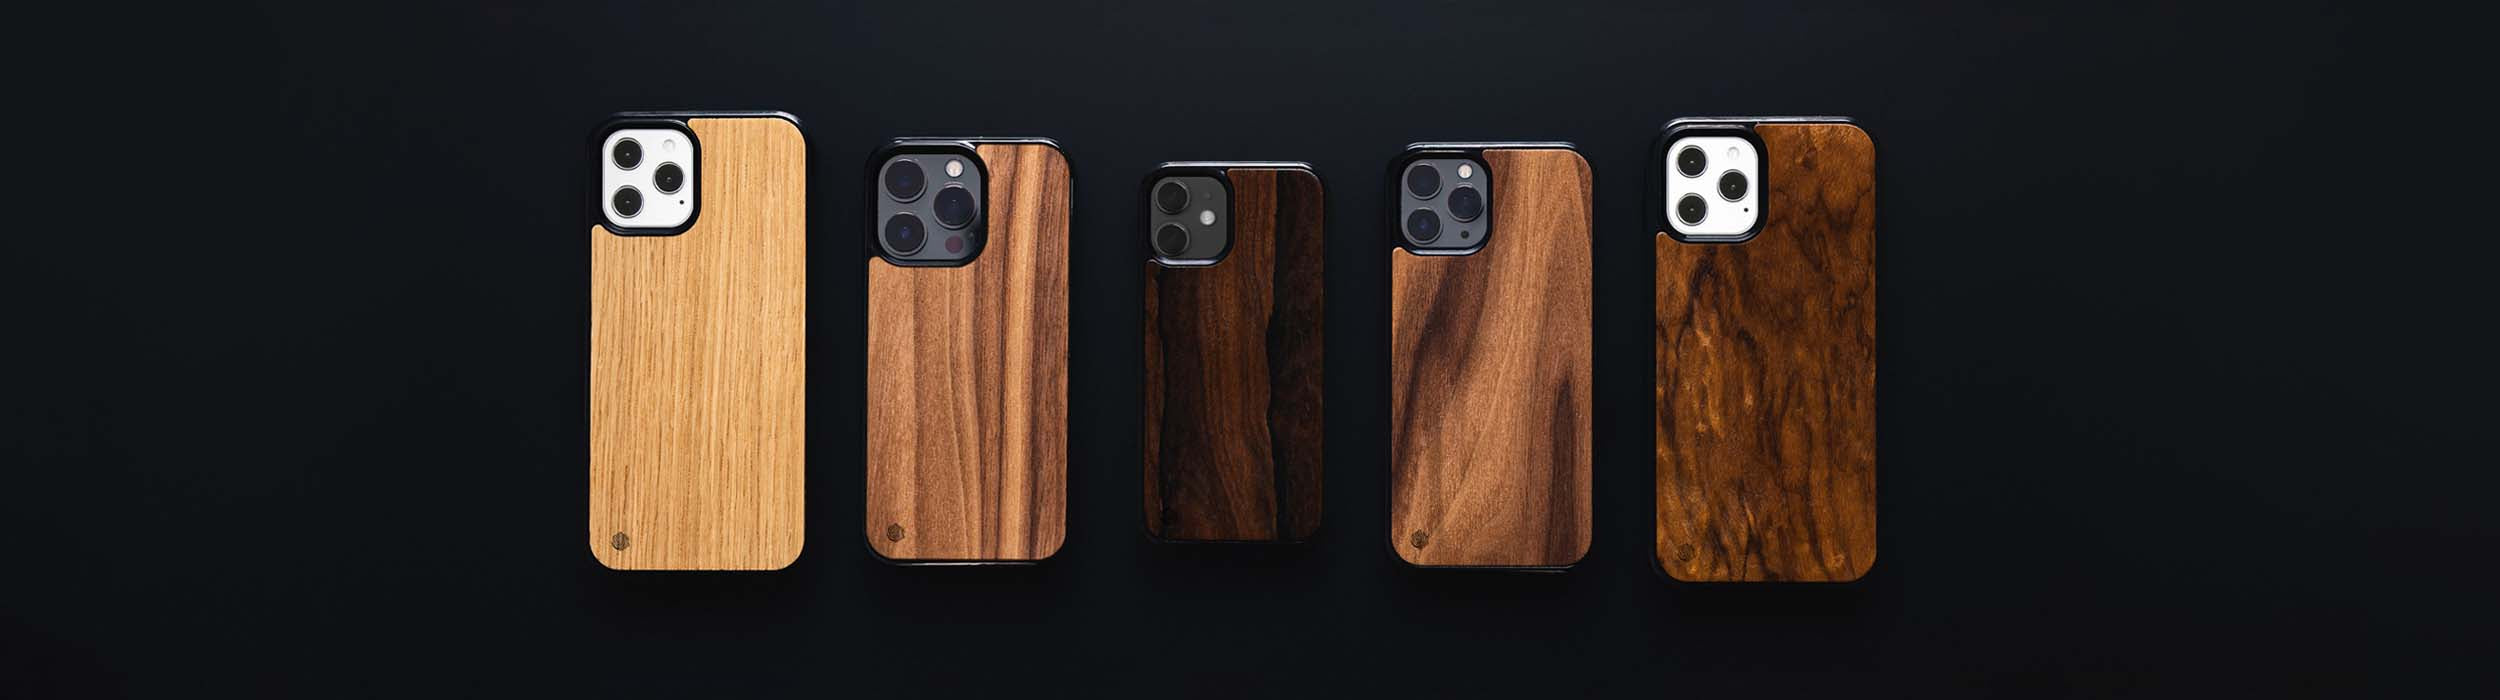 Apple iPhone 12 MINI Handyhüllen aus Holz